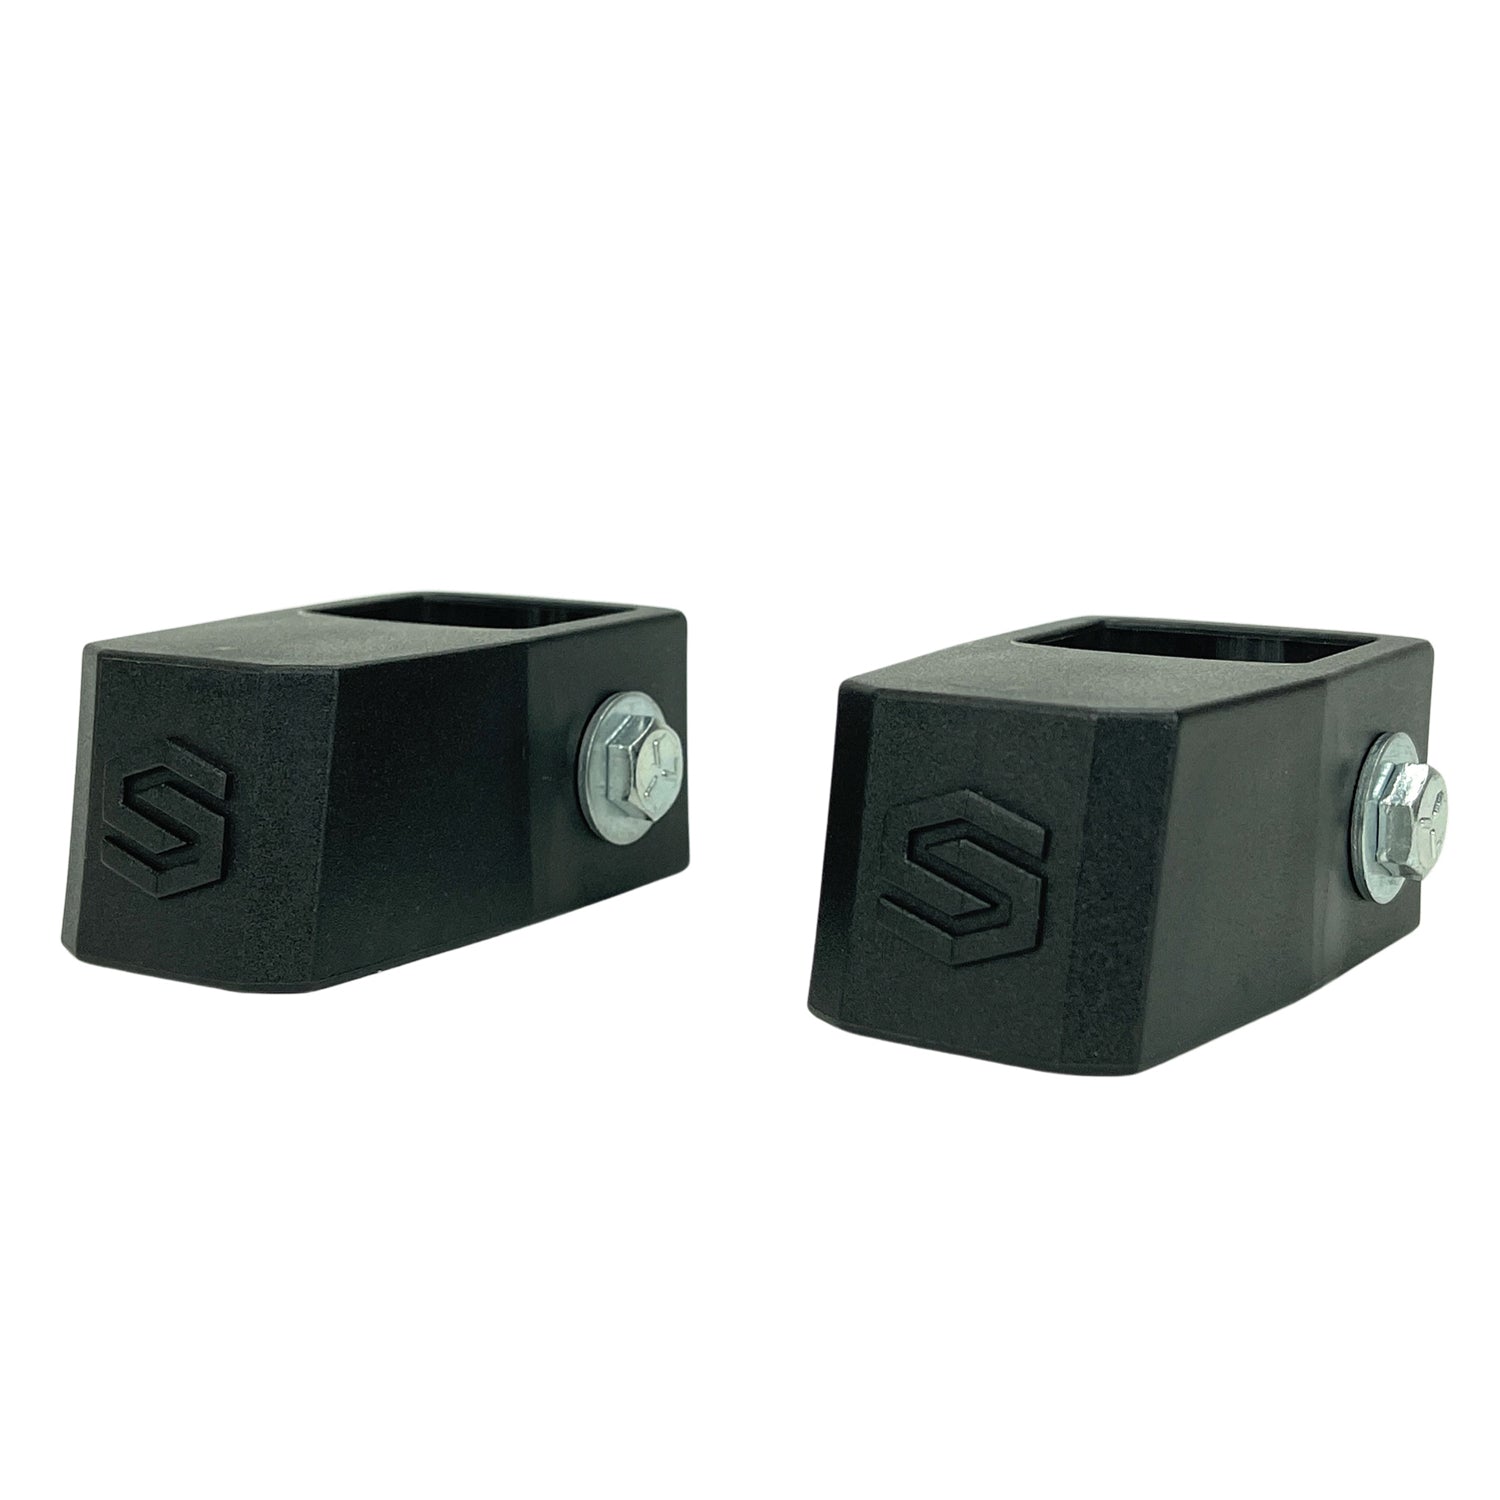 SS2008 Flexion Toe Spring Block Kit, Pair (Fits: S1X & S2X Stilts)